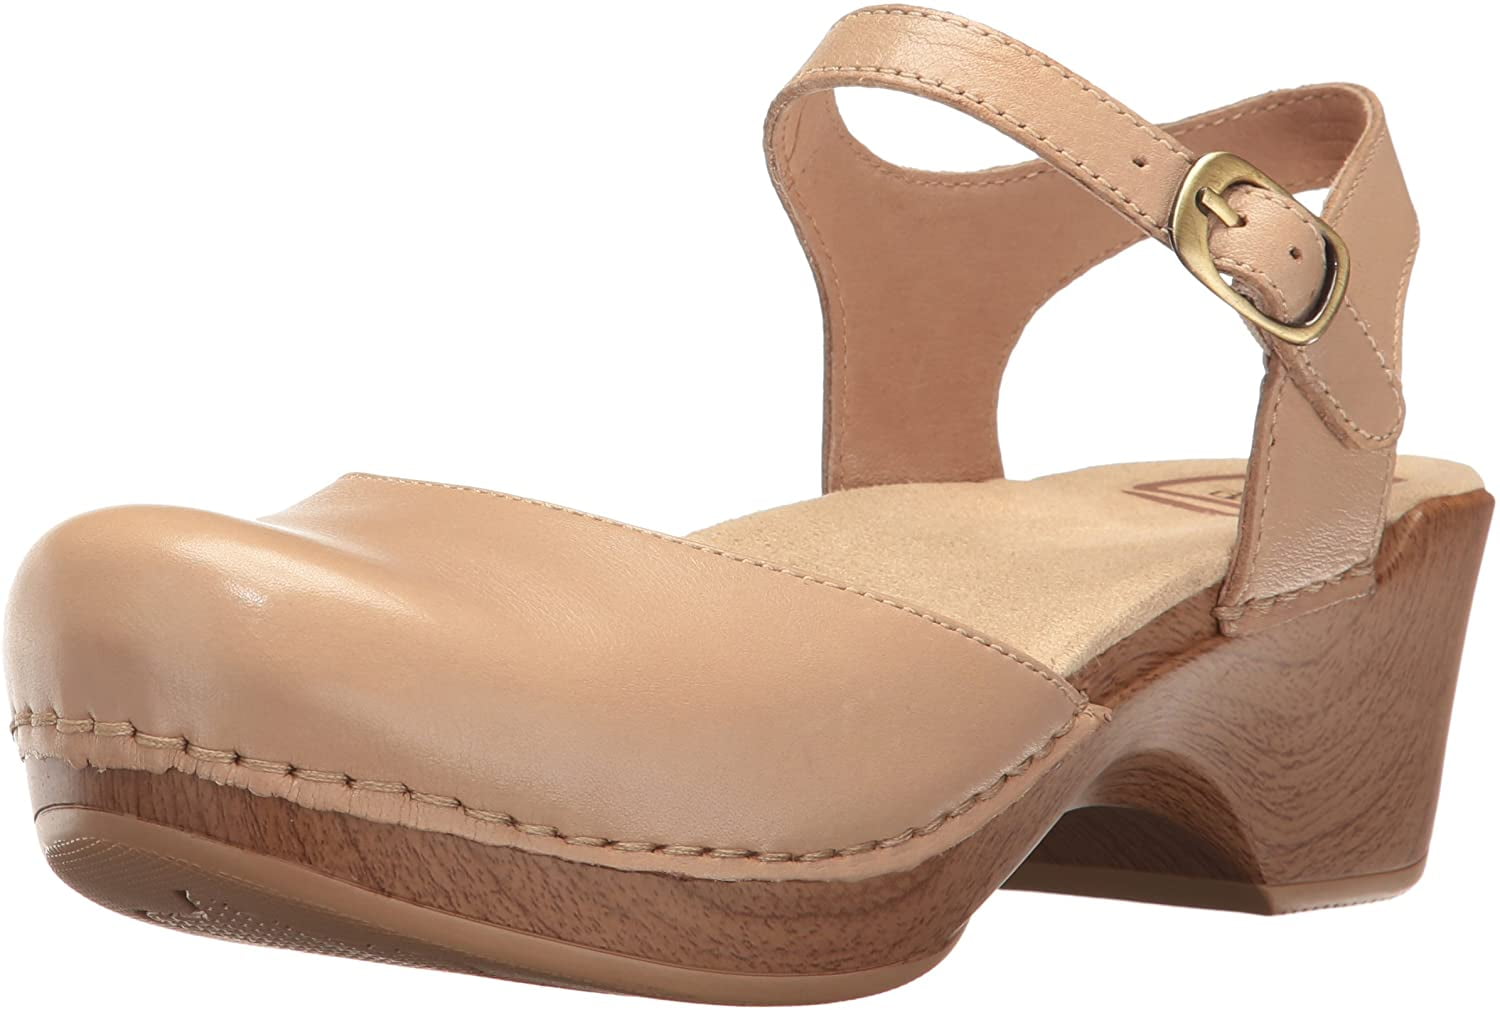 Sweeties Shoes Ivory Rhinestone Open-Toe Jessica Elegant Pumps 5.5-11 Womens